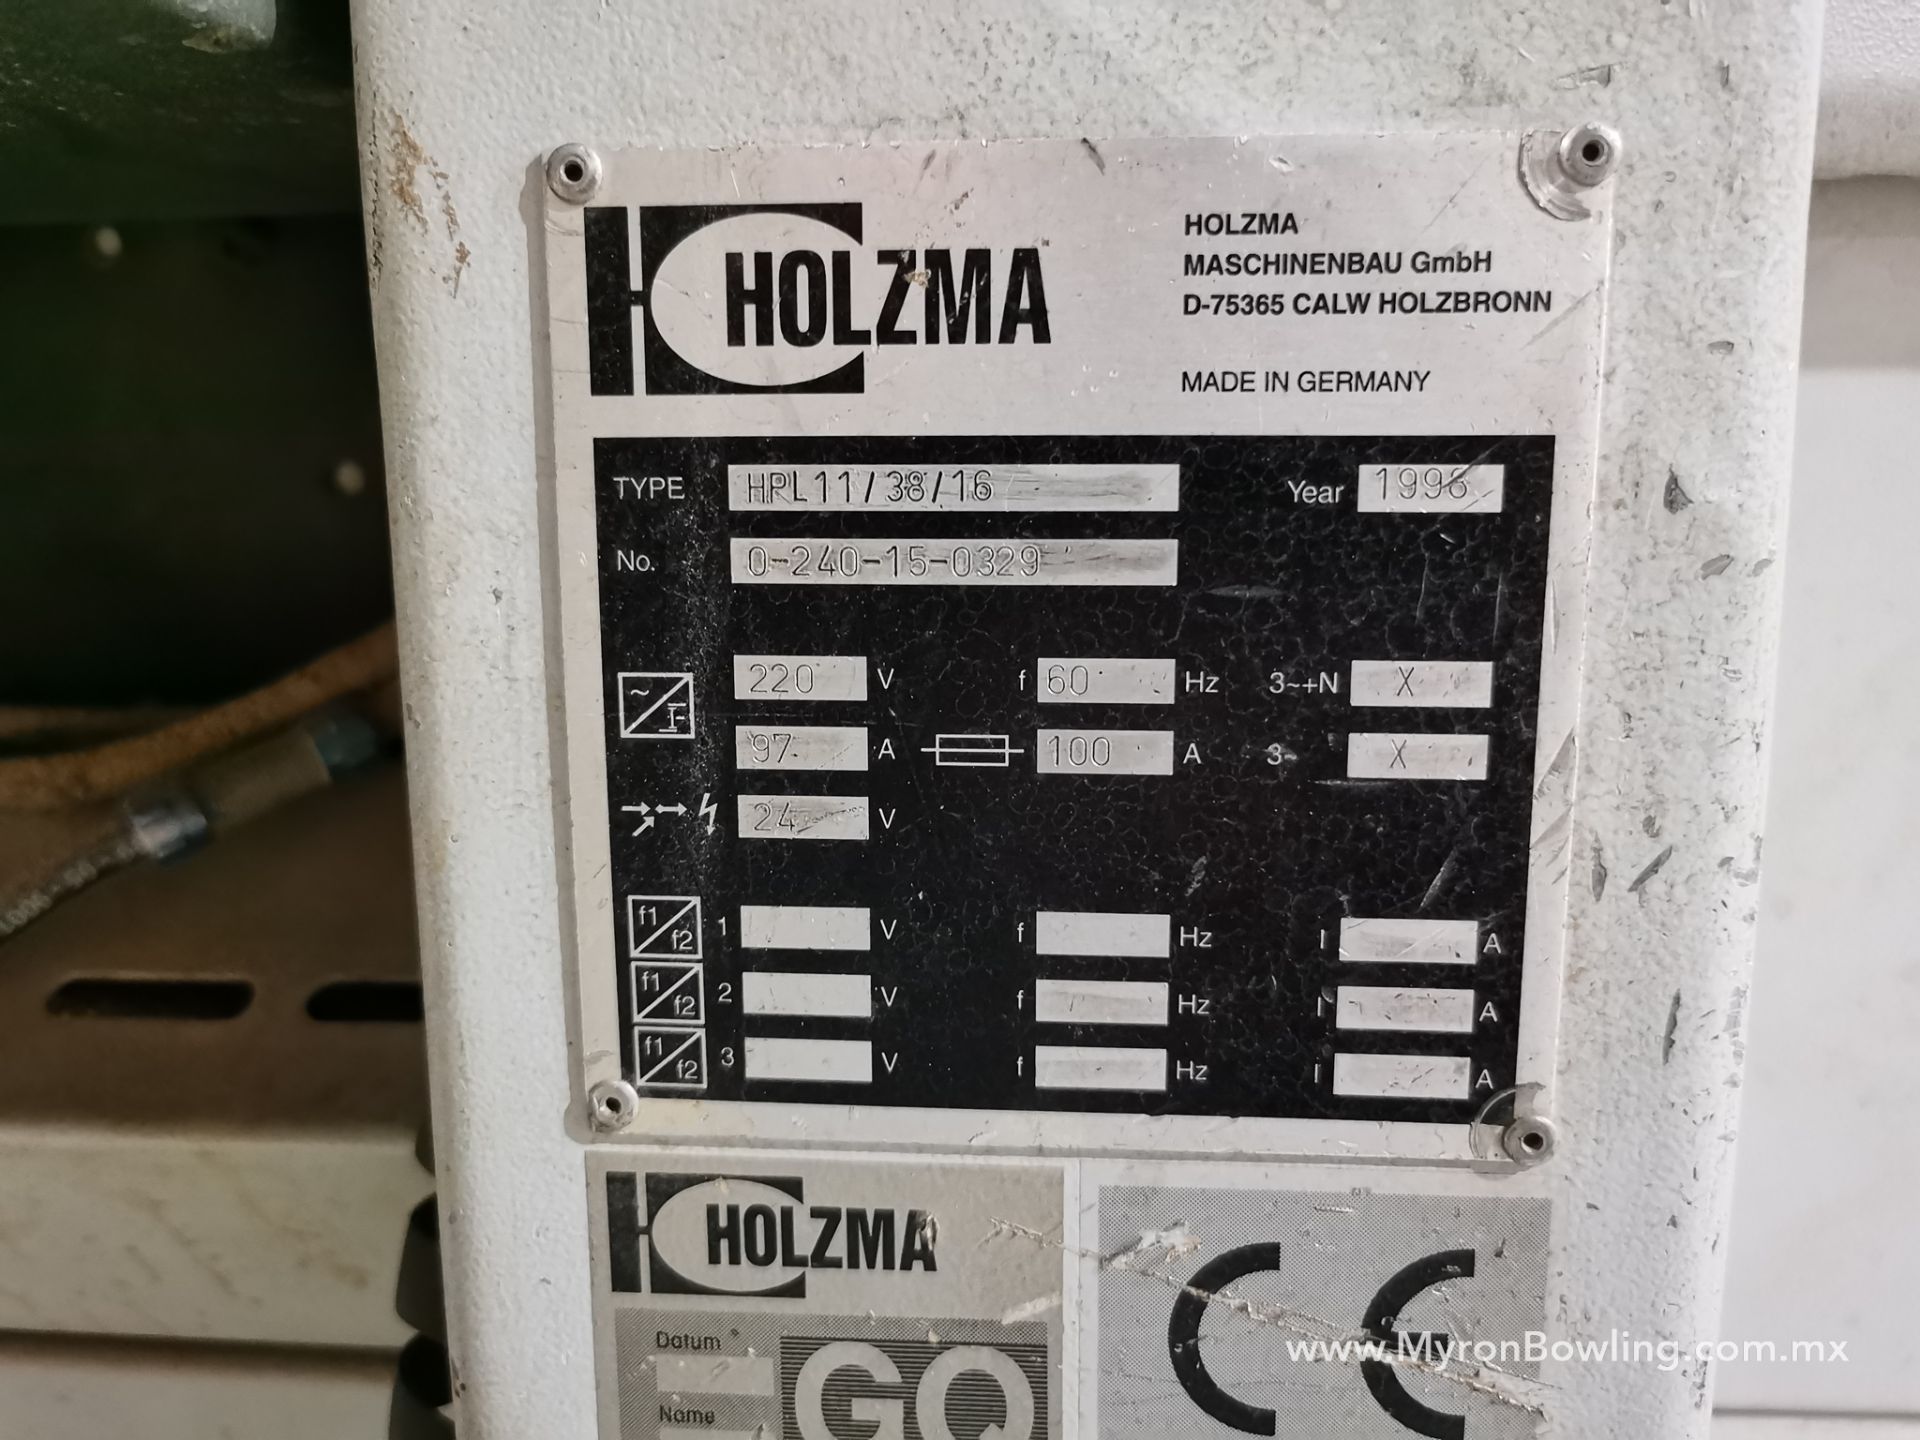 Holzma Gray Saw Machine / Gray Holzma - Infeed, Model 'HPL11/38/16, S/N 0-240-15-0329, Year 1998 - Image 24 of 26